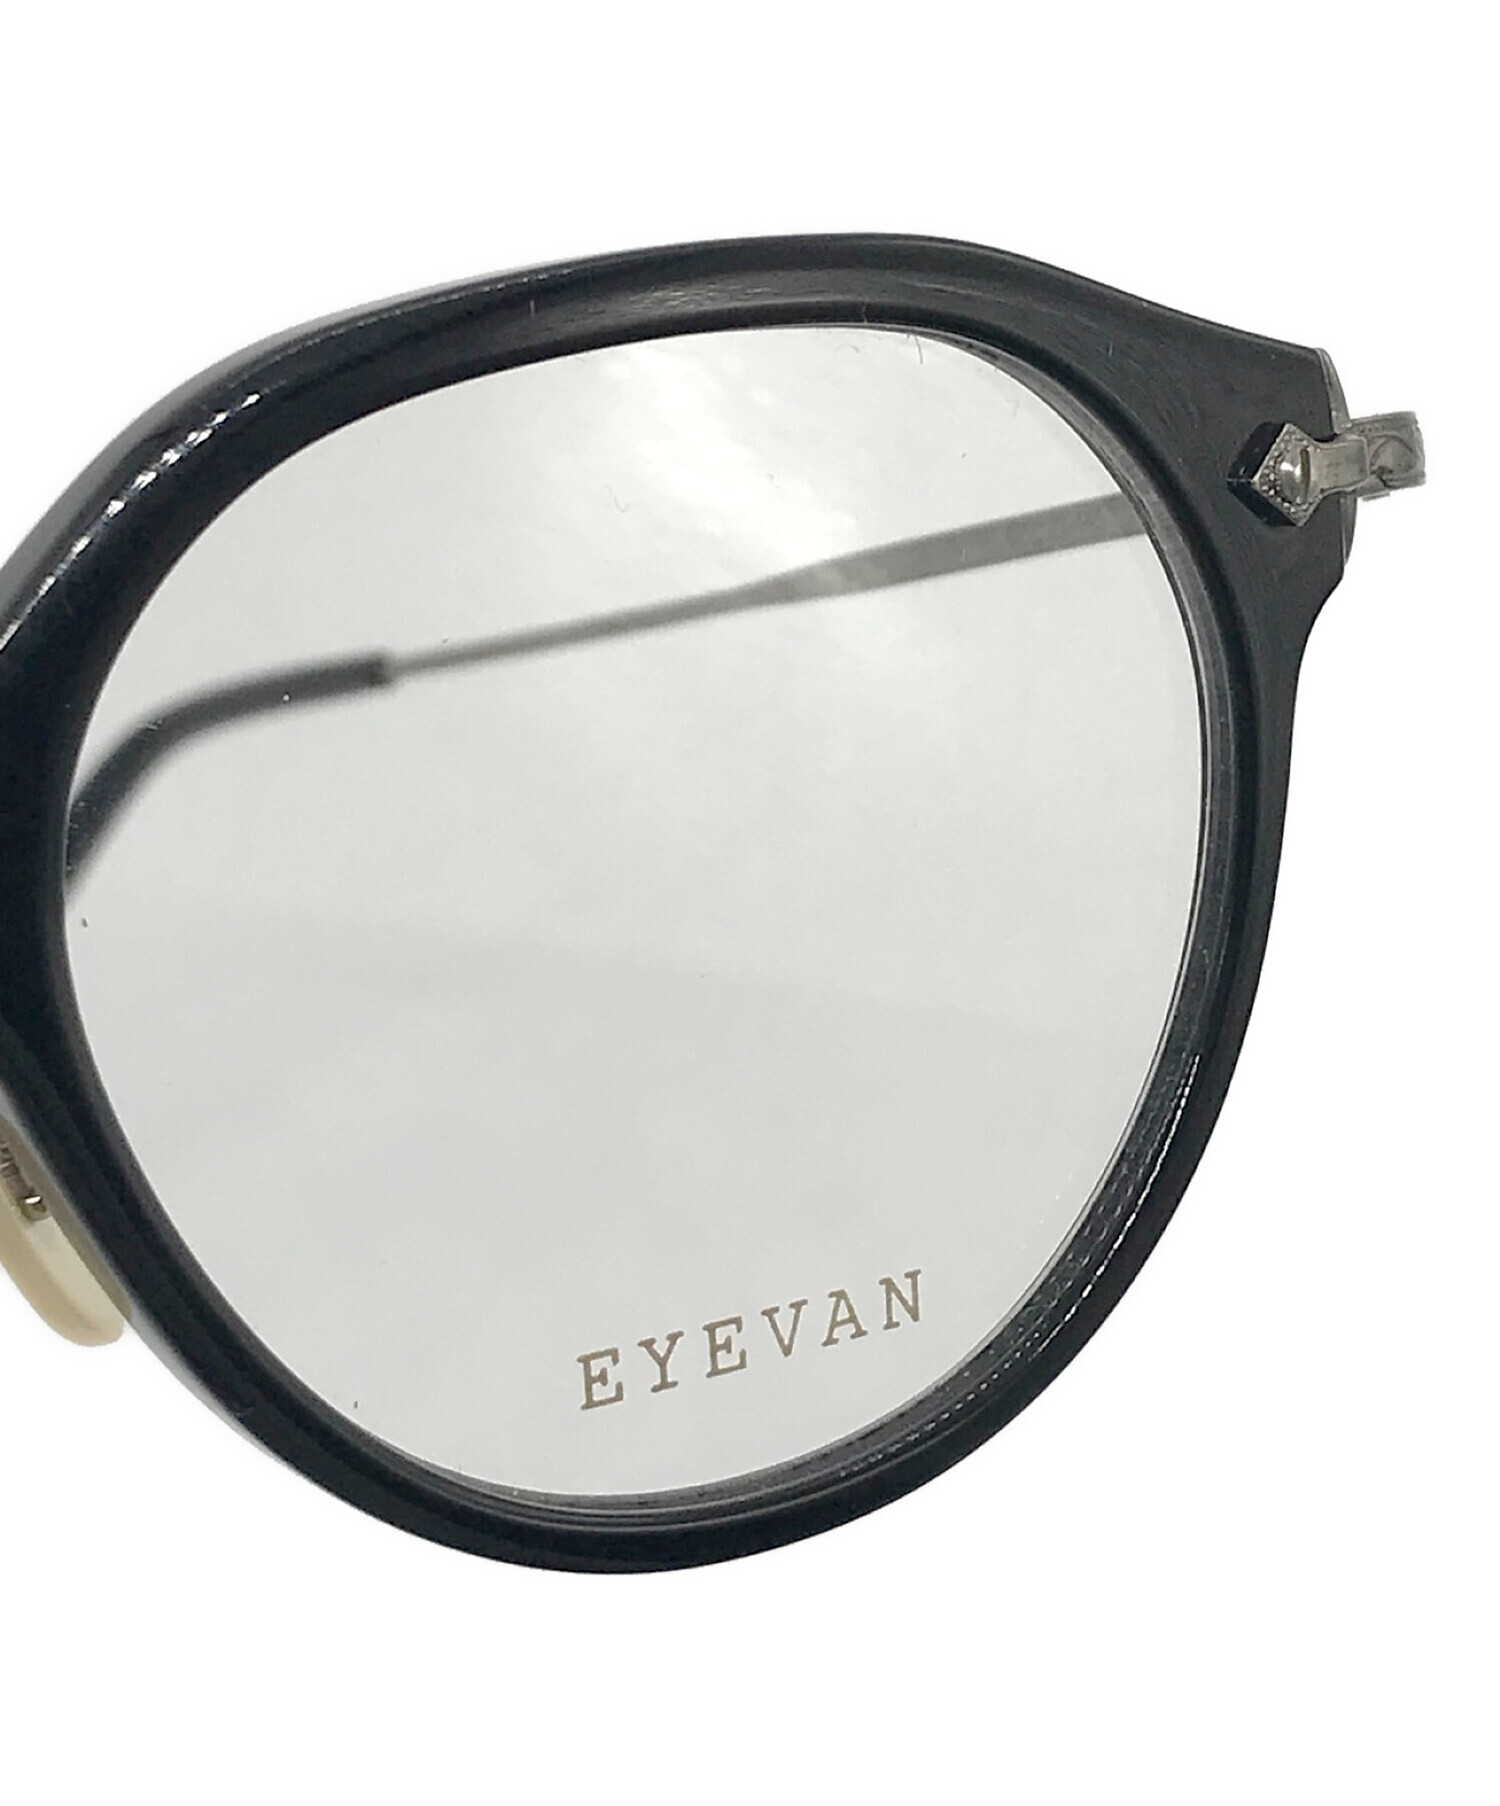 EYEVAN (アイヴァン) 伊達眼鏡 ブラック サイズ:47 □23-145